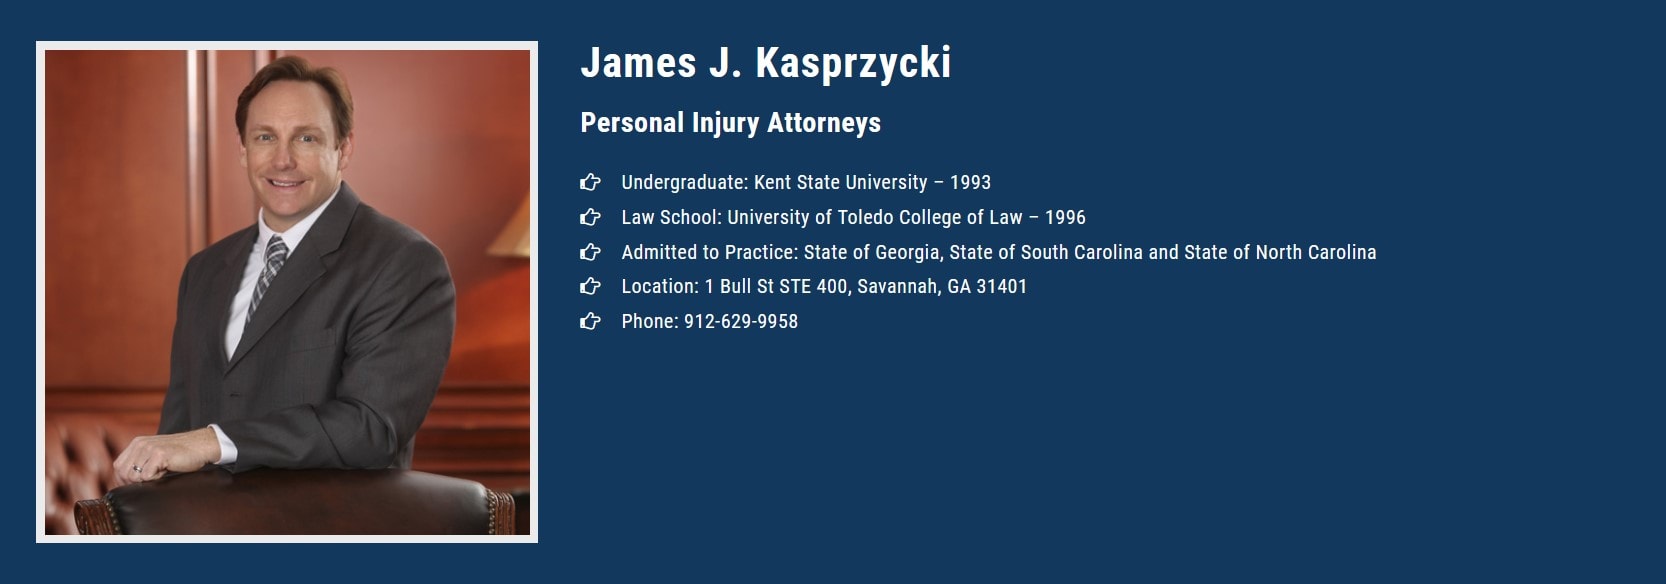 James J. Kasprzycki - Savannah, GA, US, personal injury lawyer in savannah